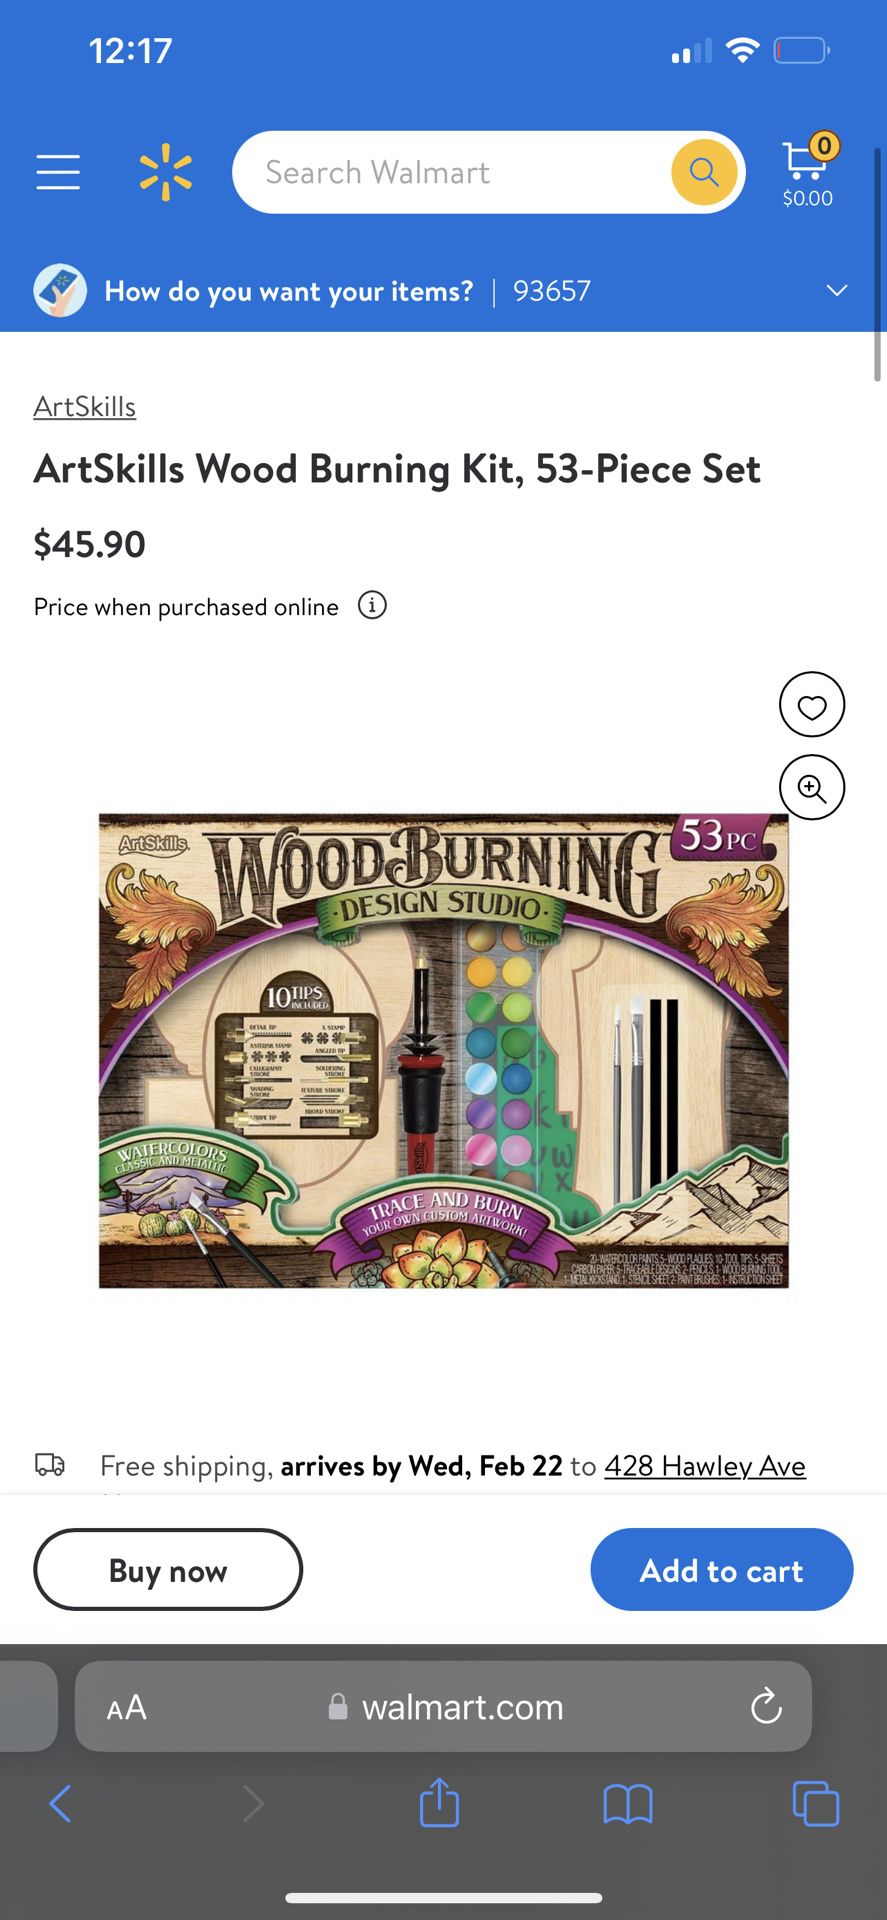 ArtSkills Wood Burning Kit with Watercolor Paints, 53-Piece Set